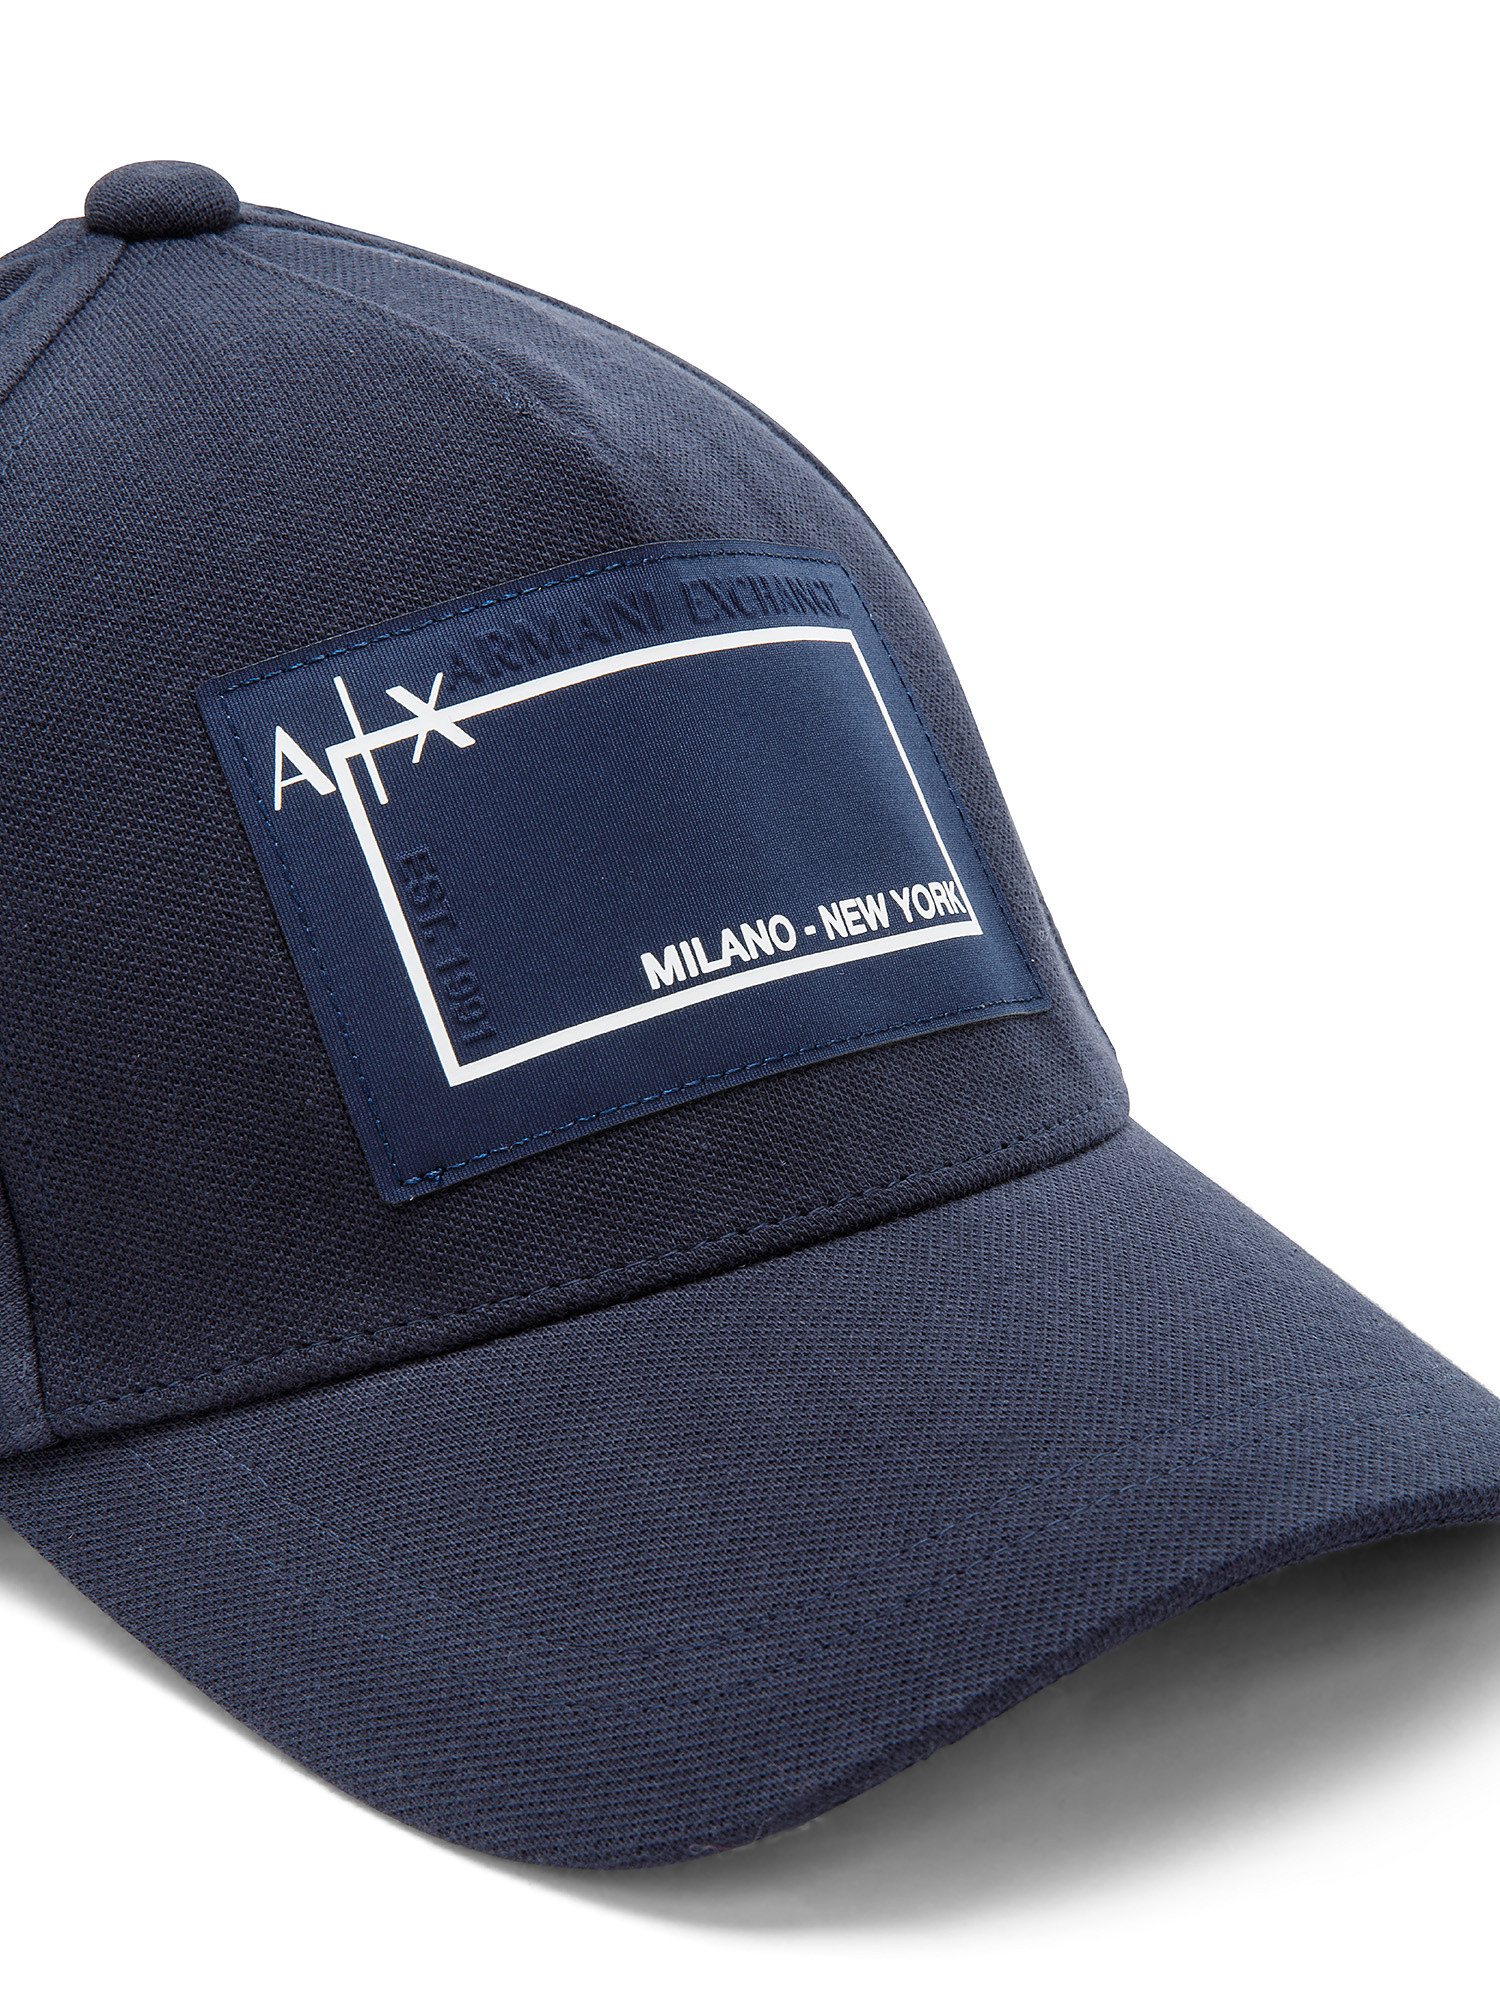 Armani Exchange - Cotton piquà© hat with visor, Dark Blue, large image number 1